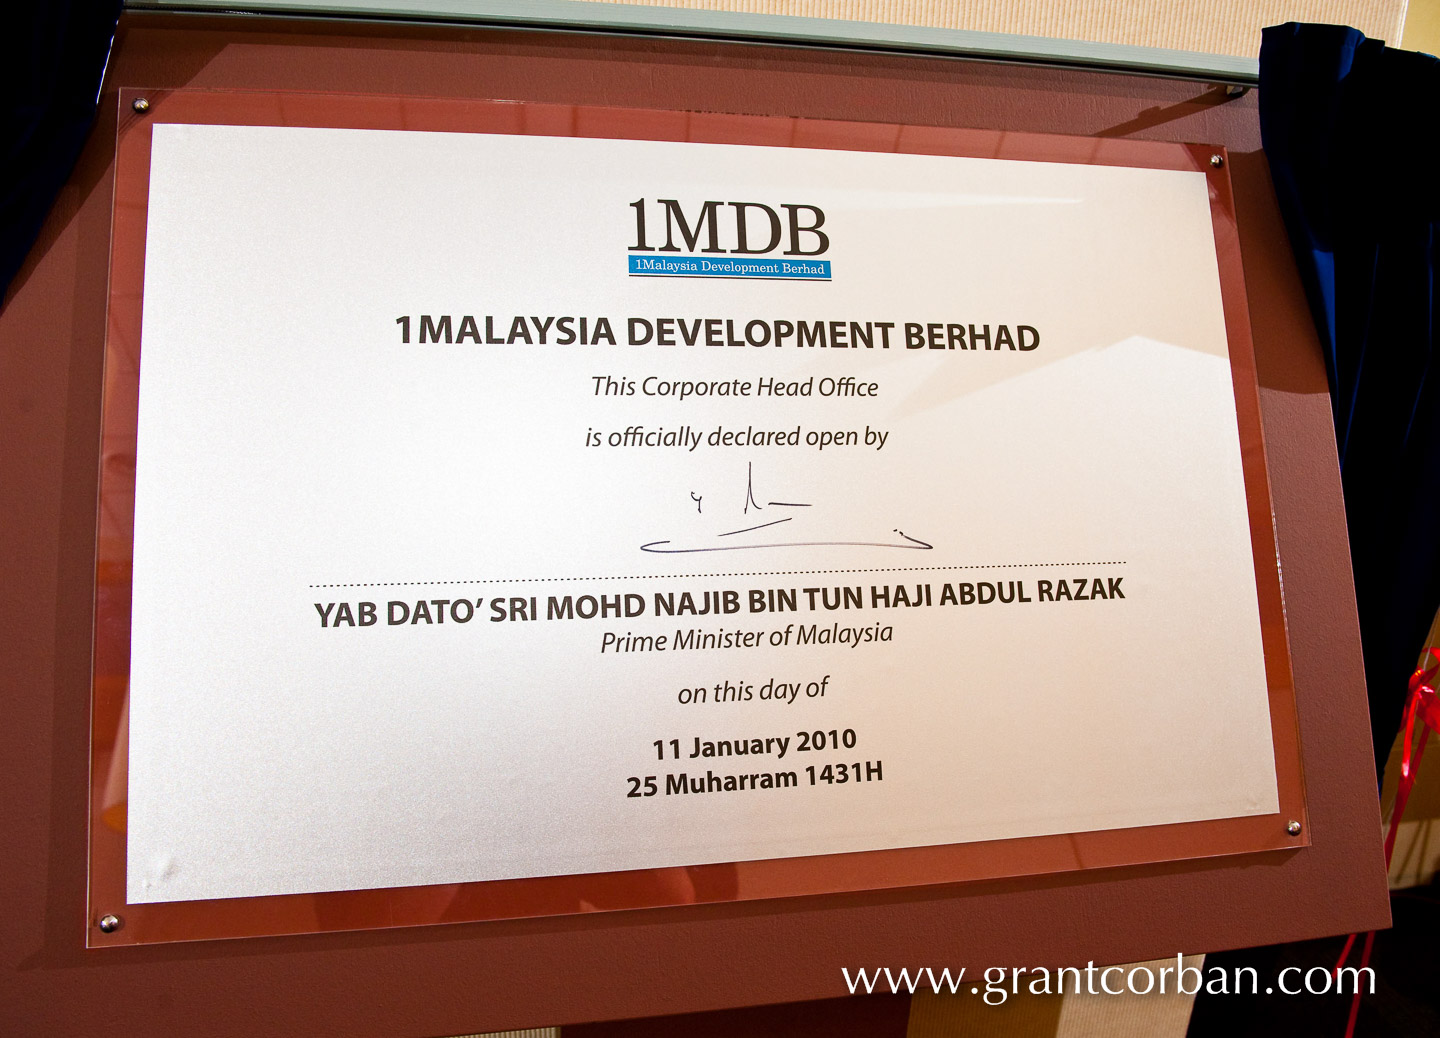 1MDB Head Office Launch in Menara IMC